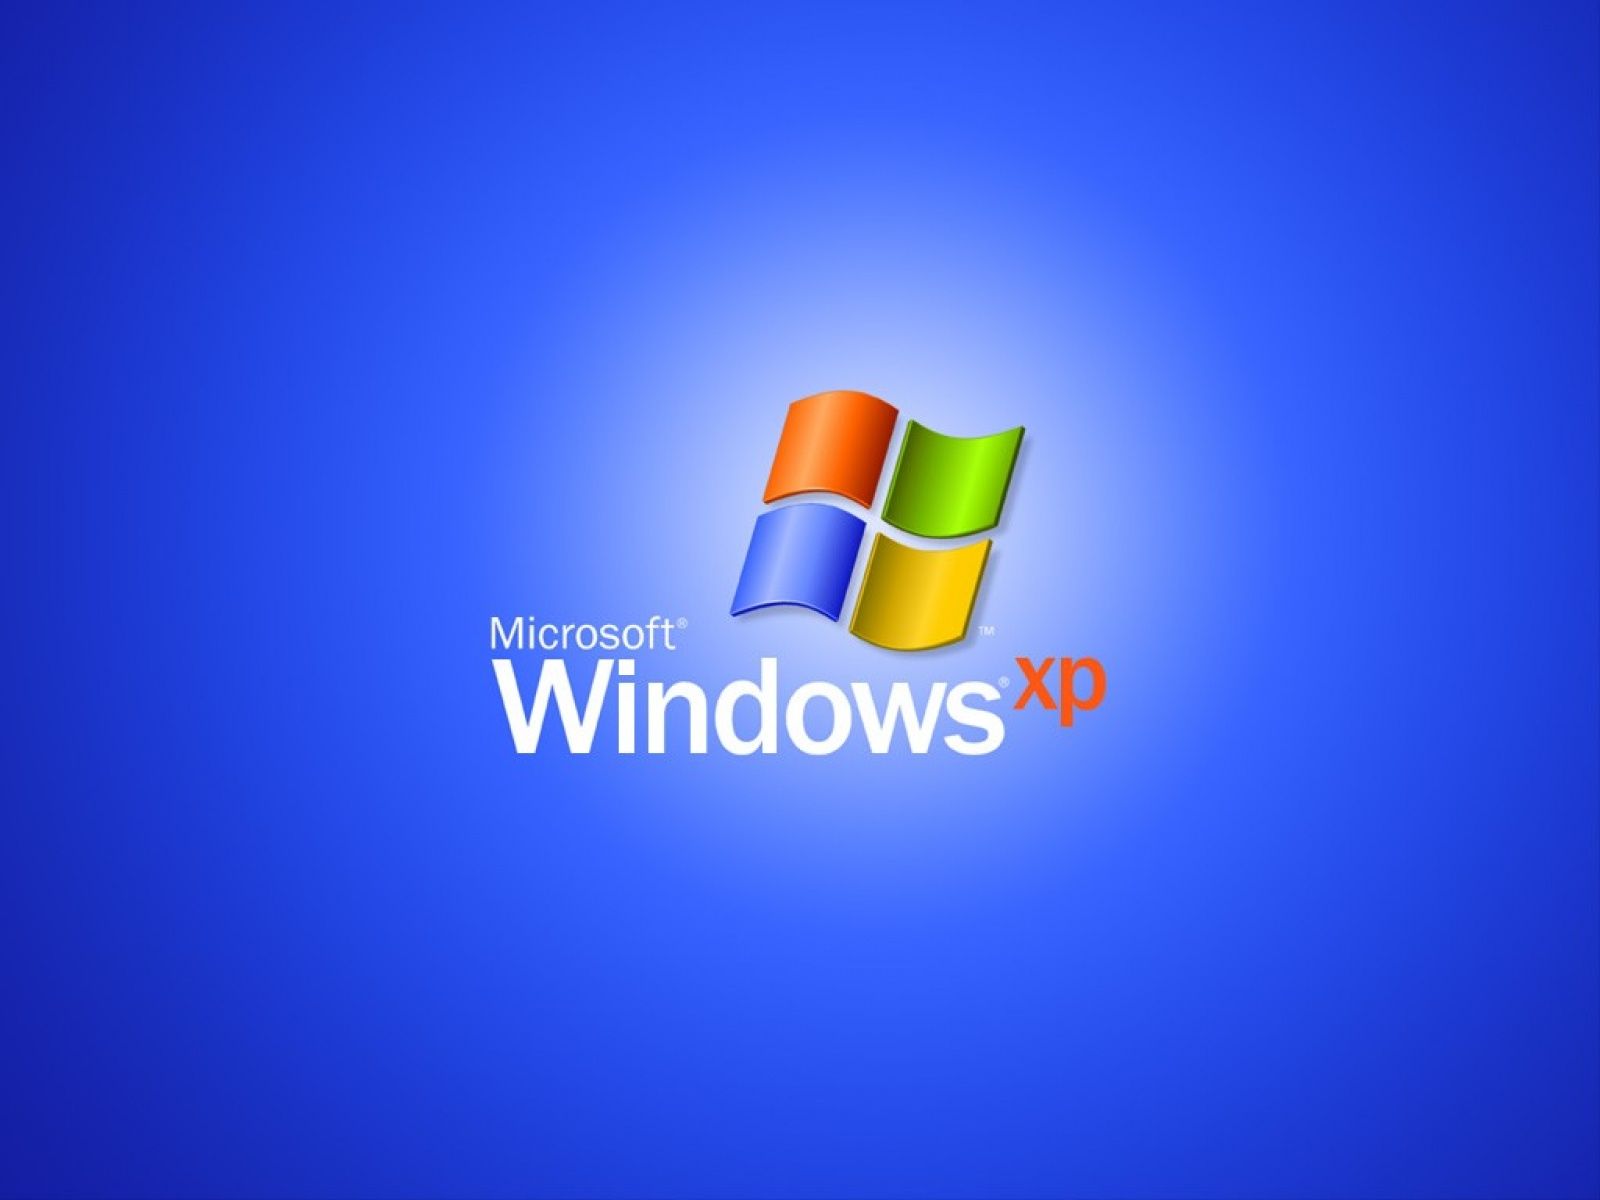 Windows xp logo wallpapers